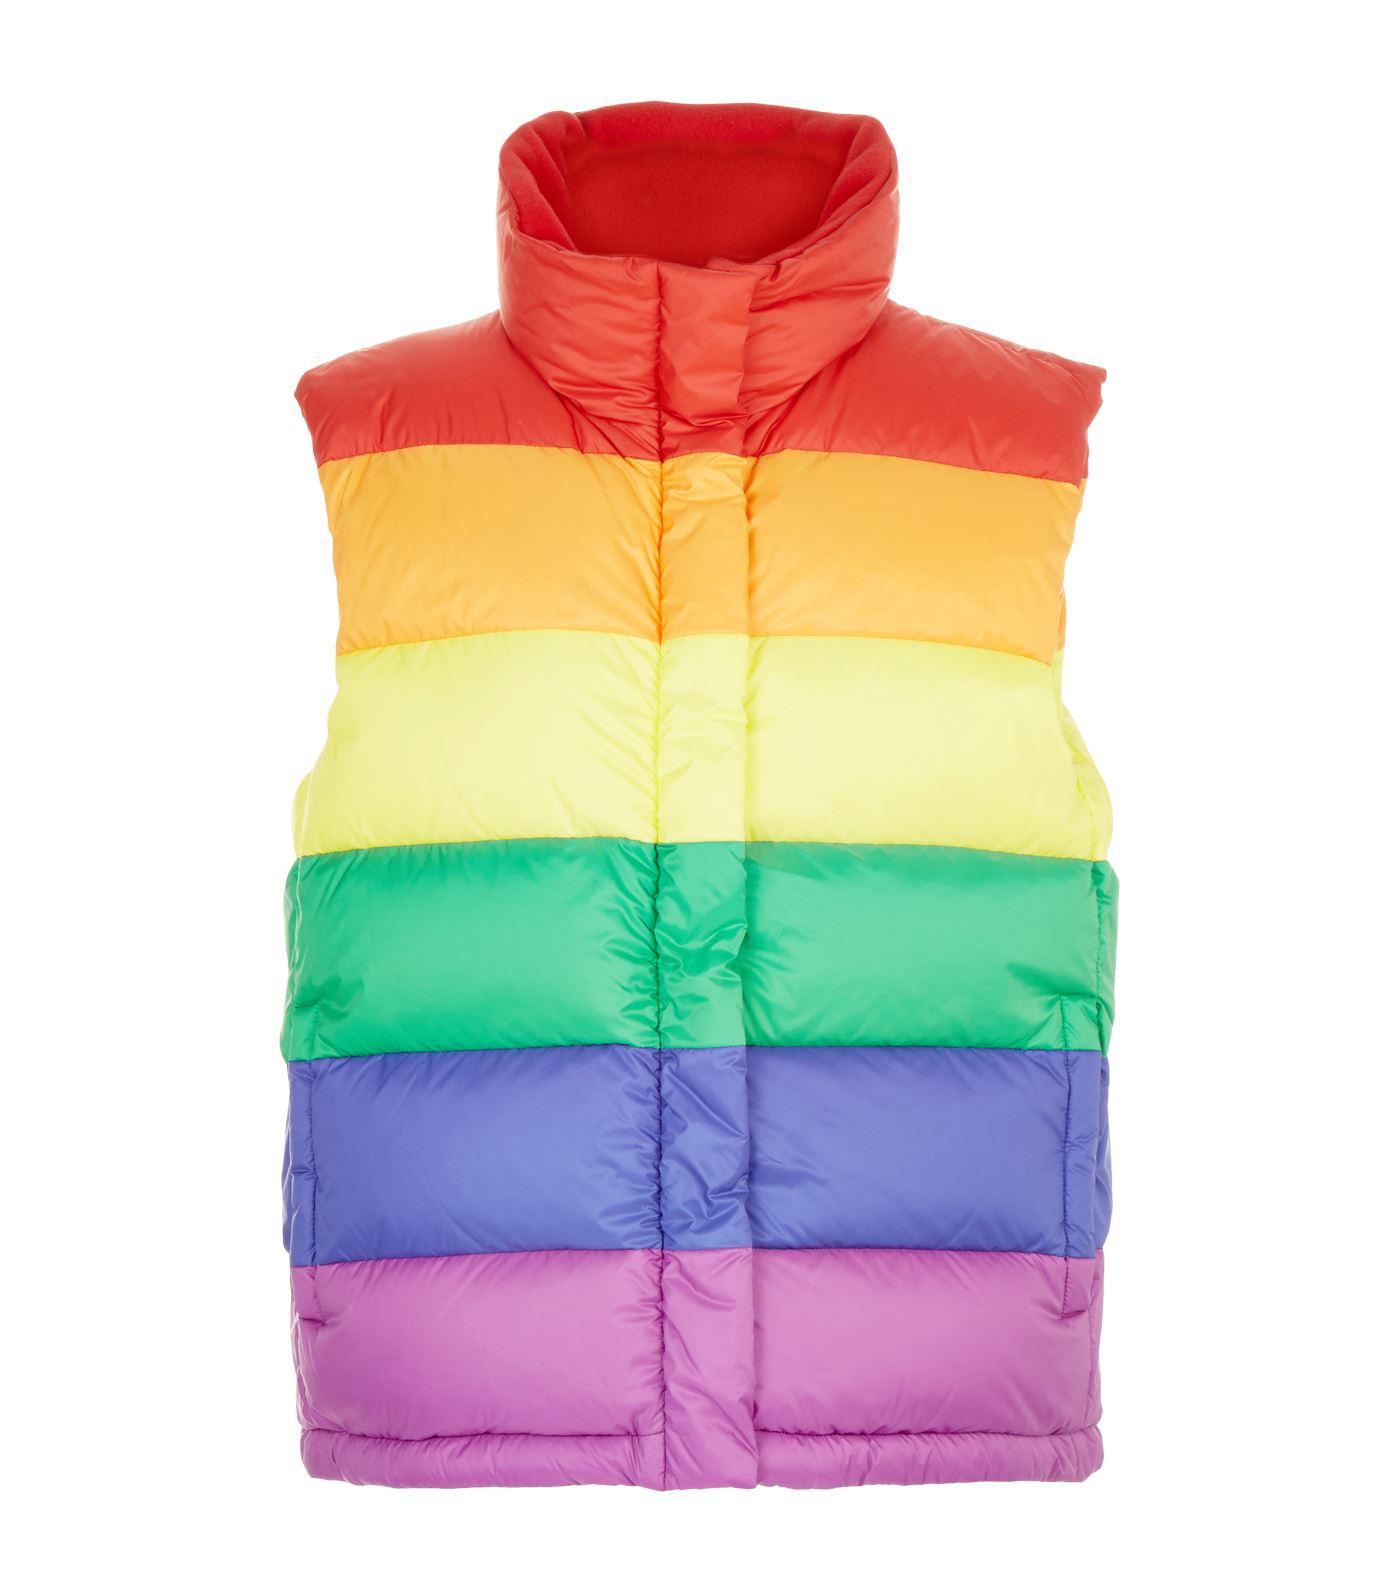 Burberry Fleece Rainbow Puffer Vest in Green - Lyst